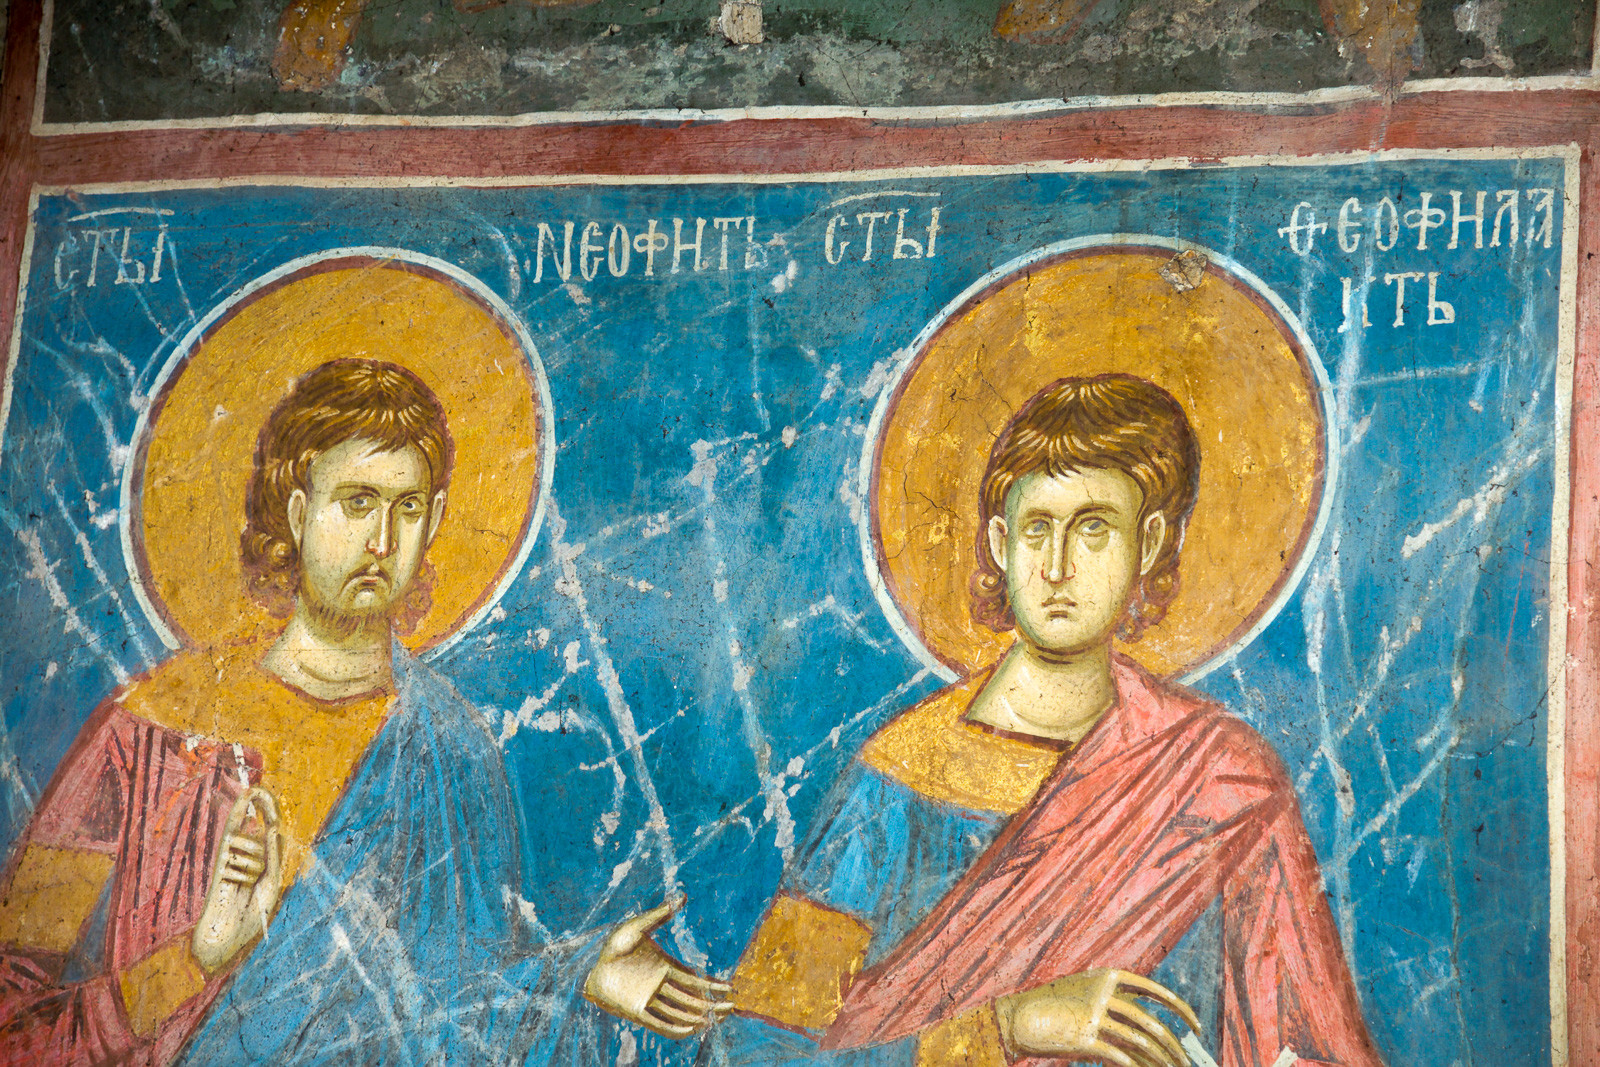 125,126 St. Neophytus (Neophytos) and St. Theophylactus